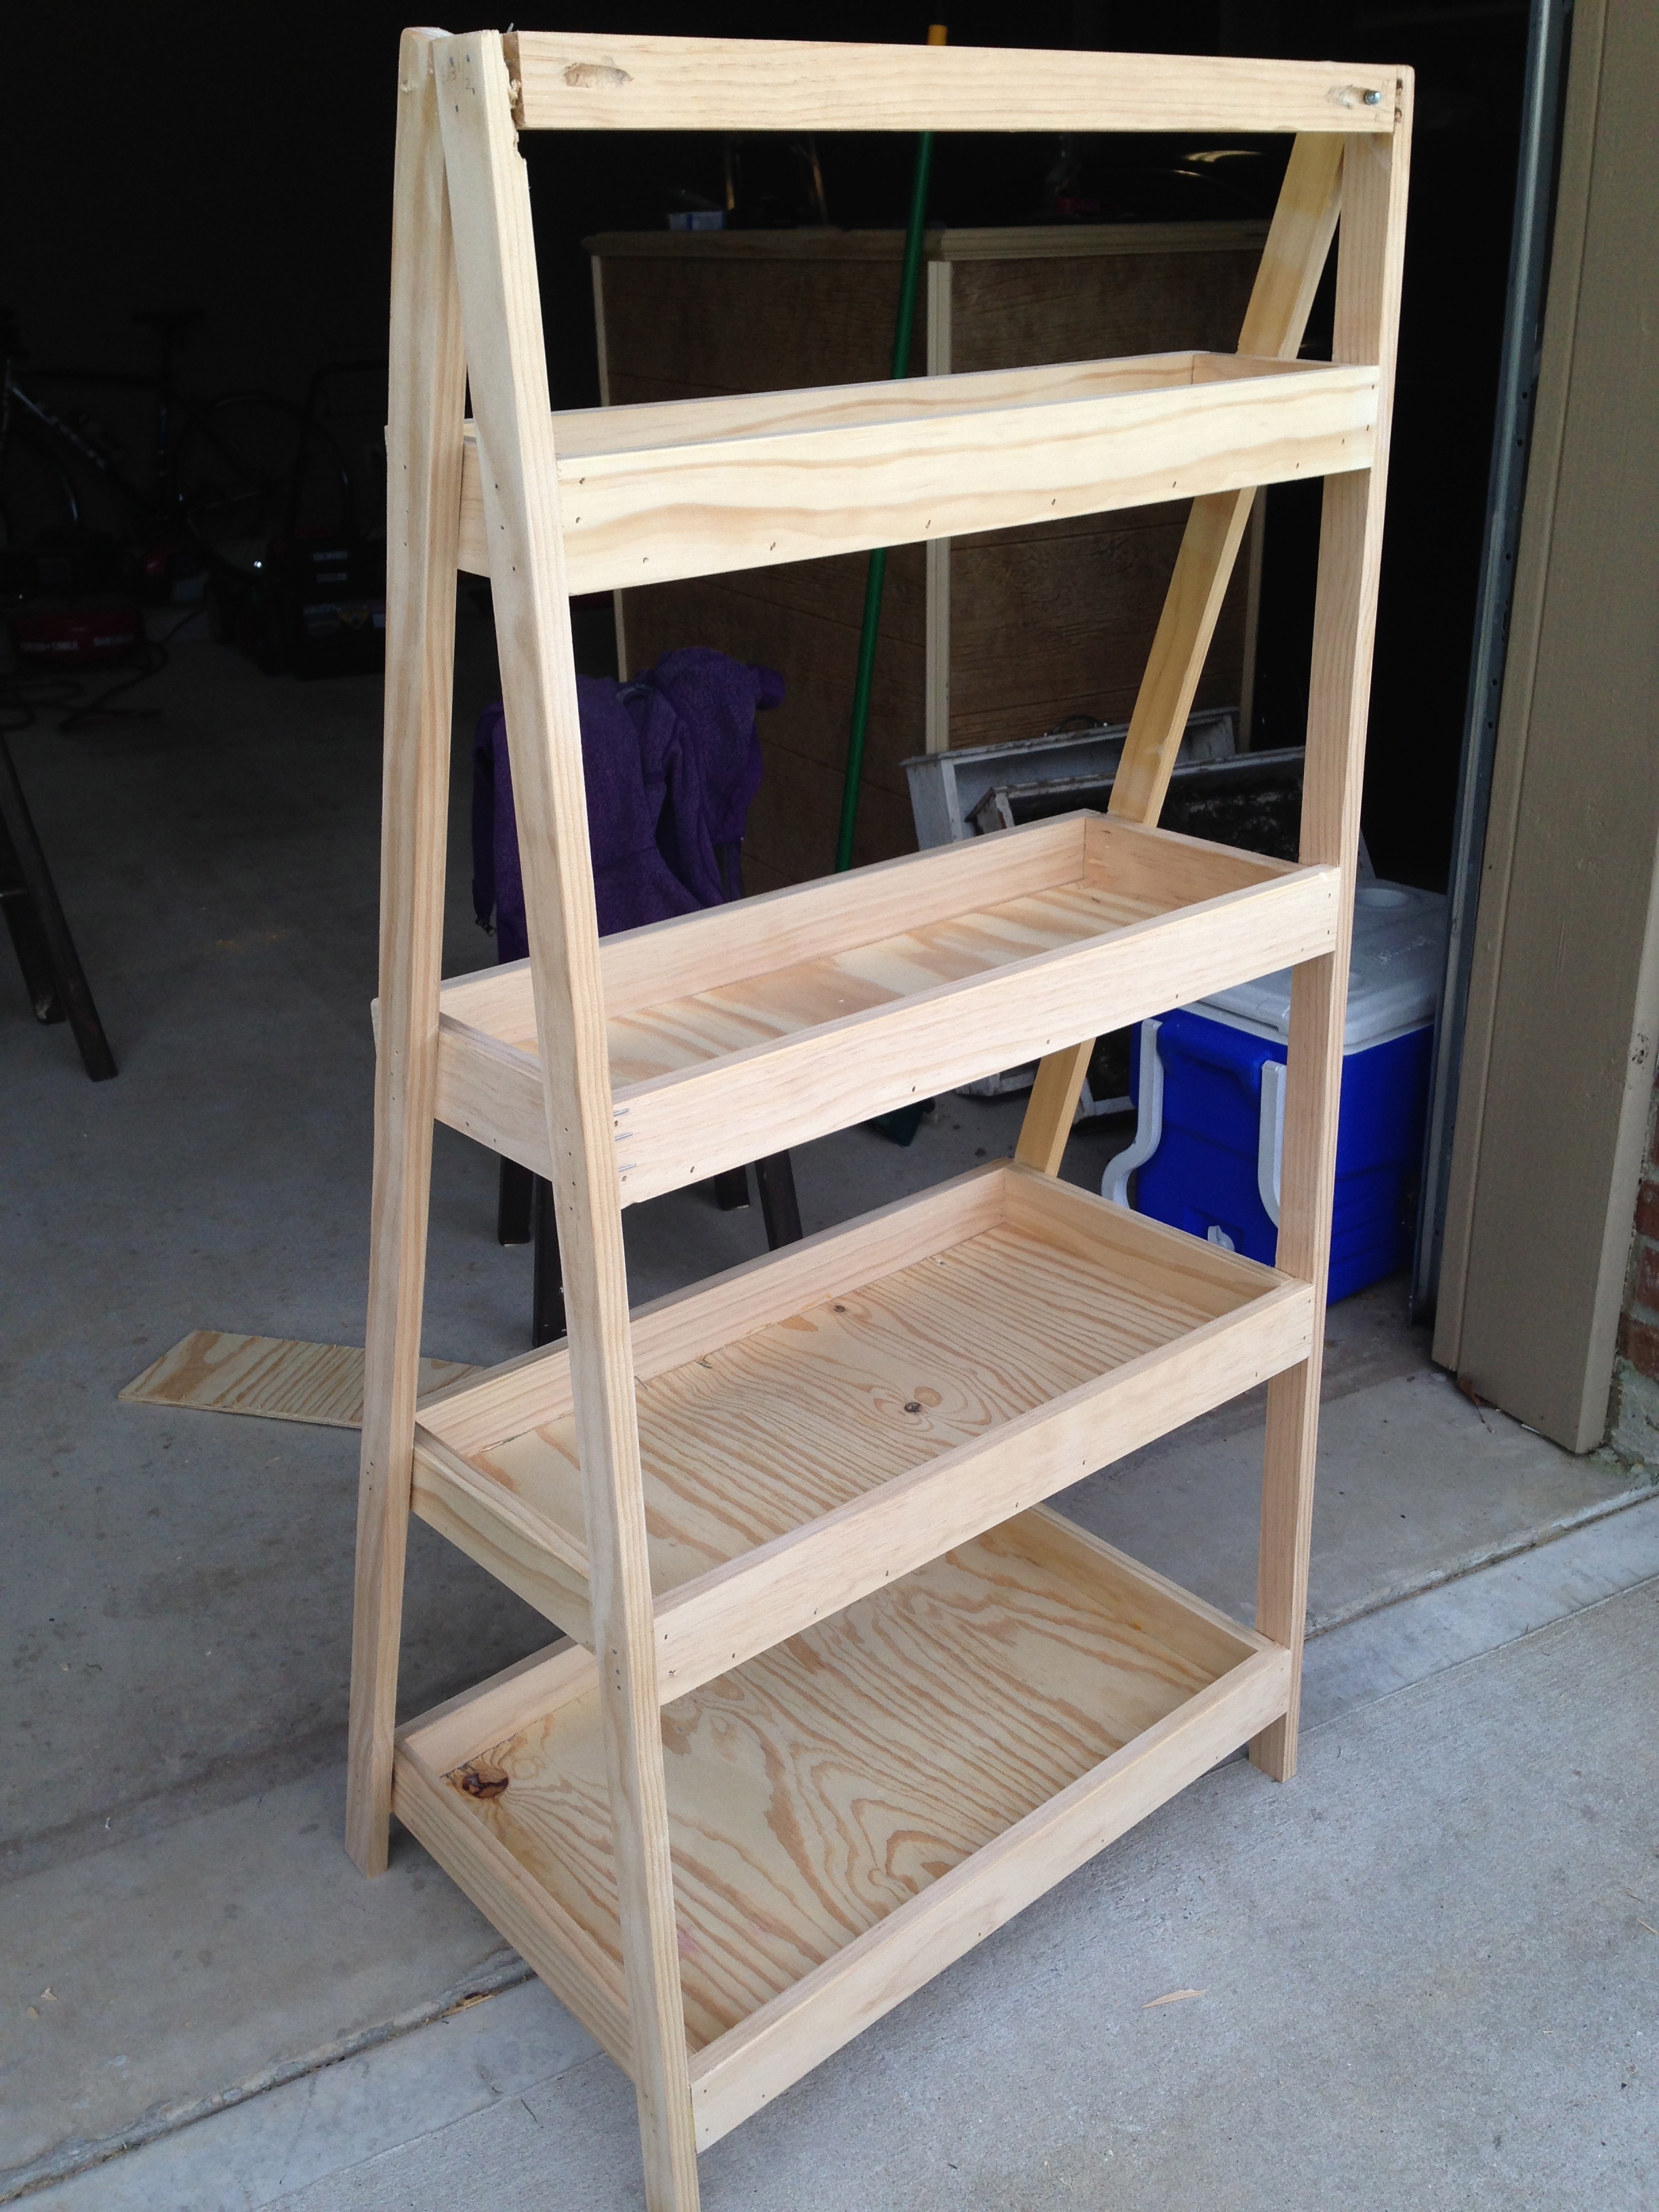 Best ideas about DIY Ladder Shelf
. Save or Pin DIY Painter’s Ladder Shelf Now.